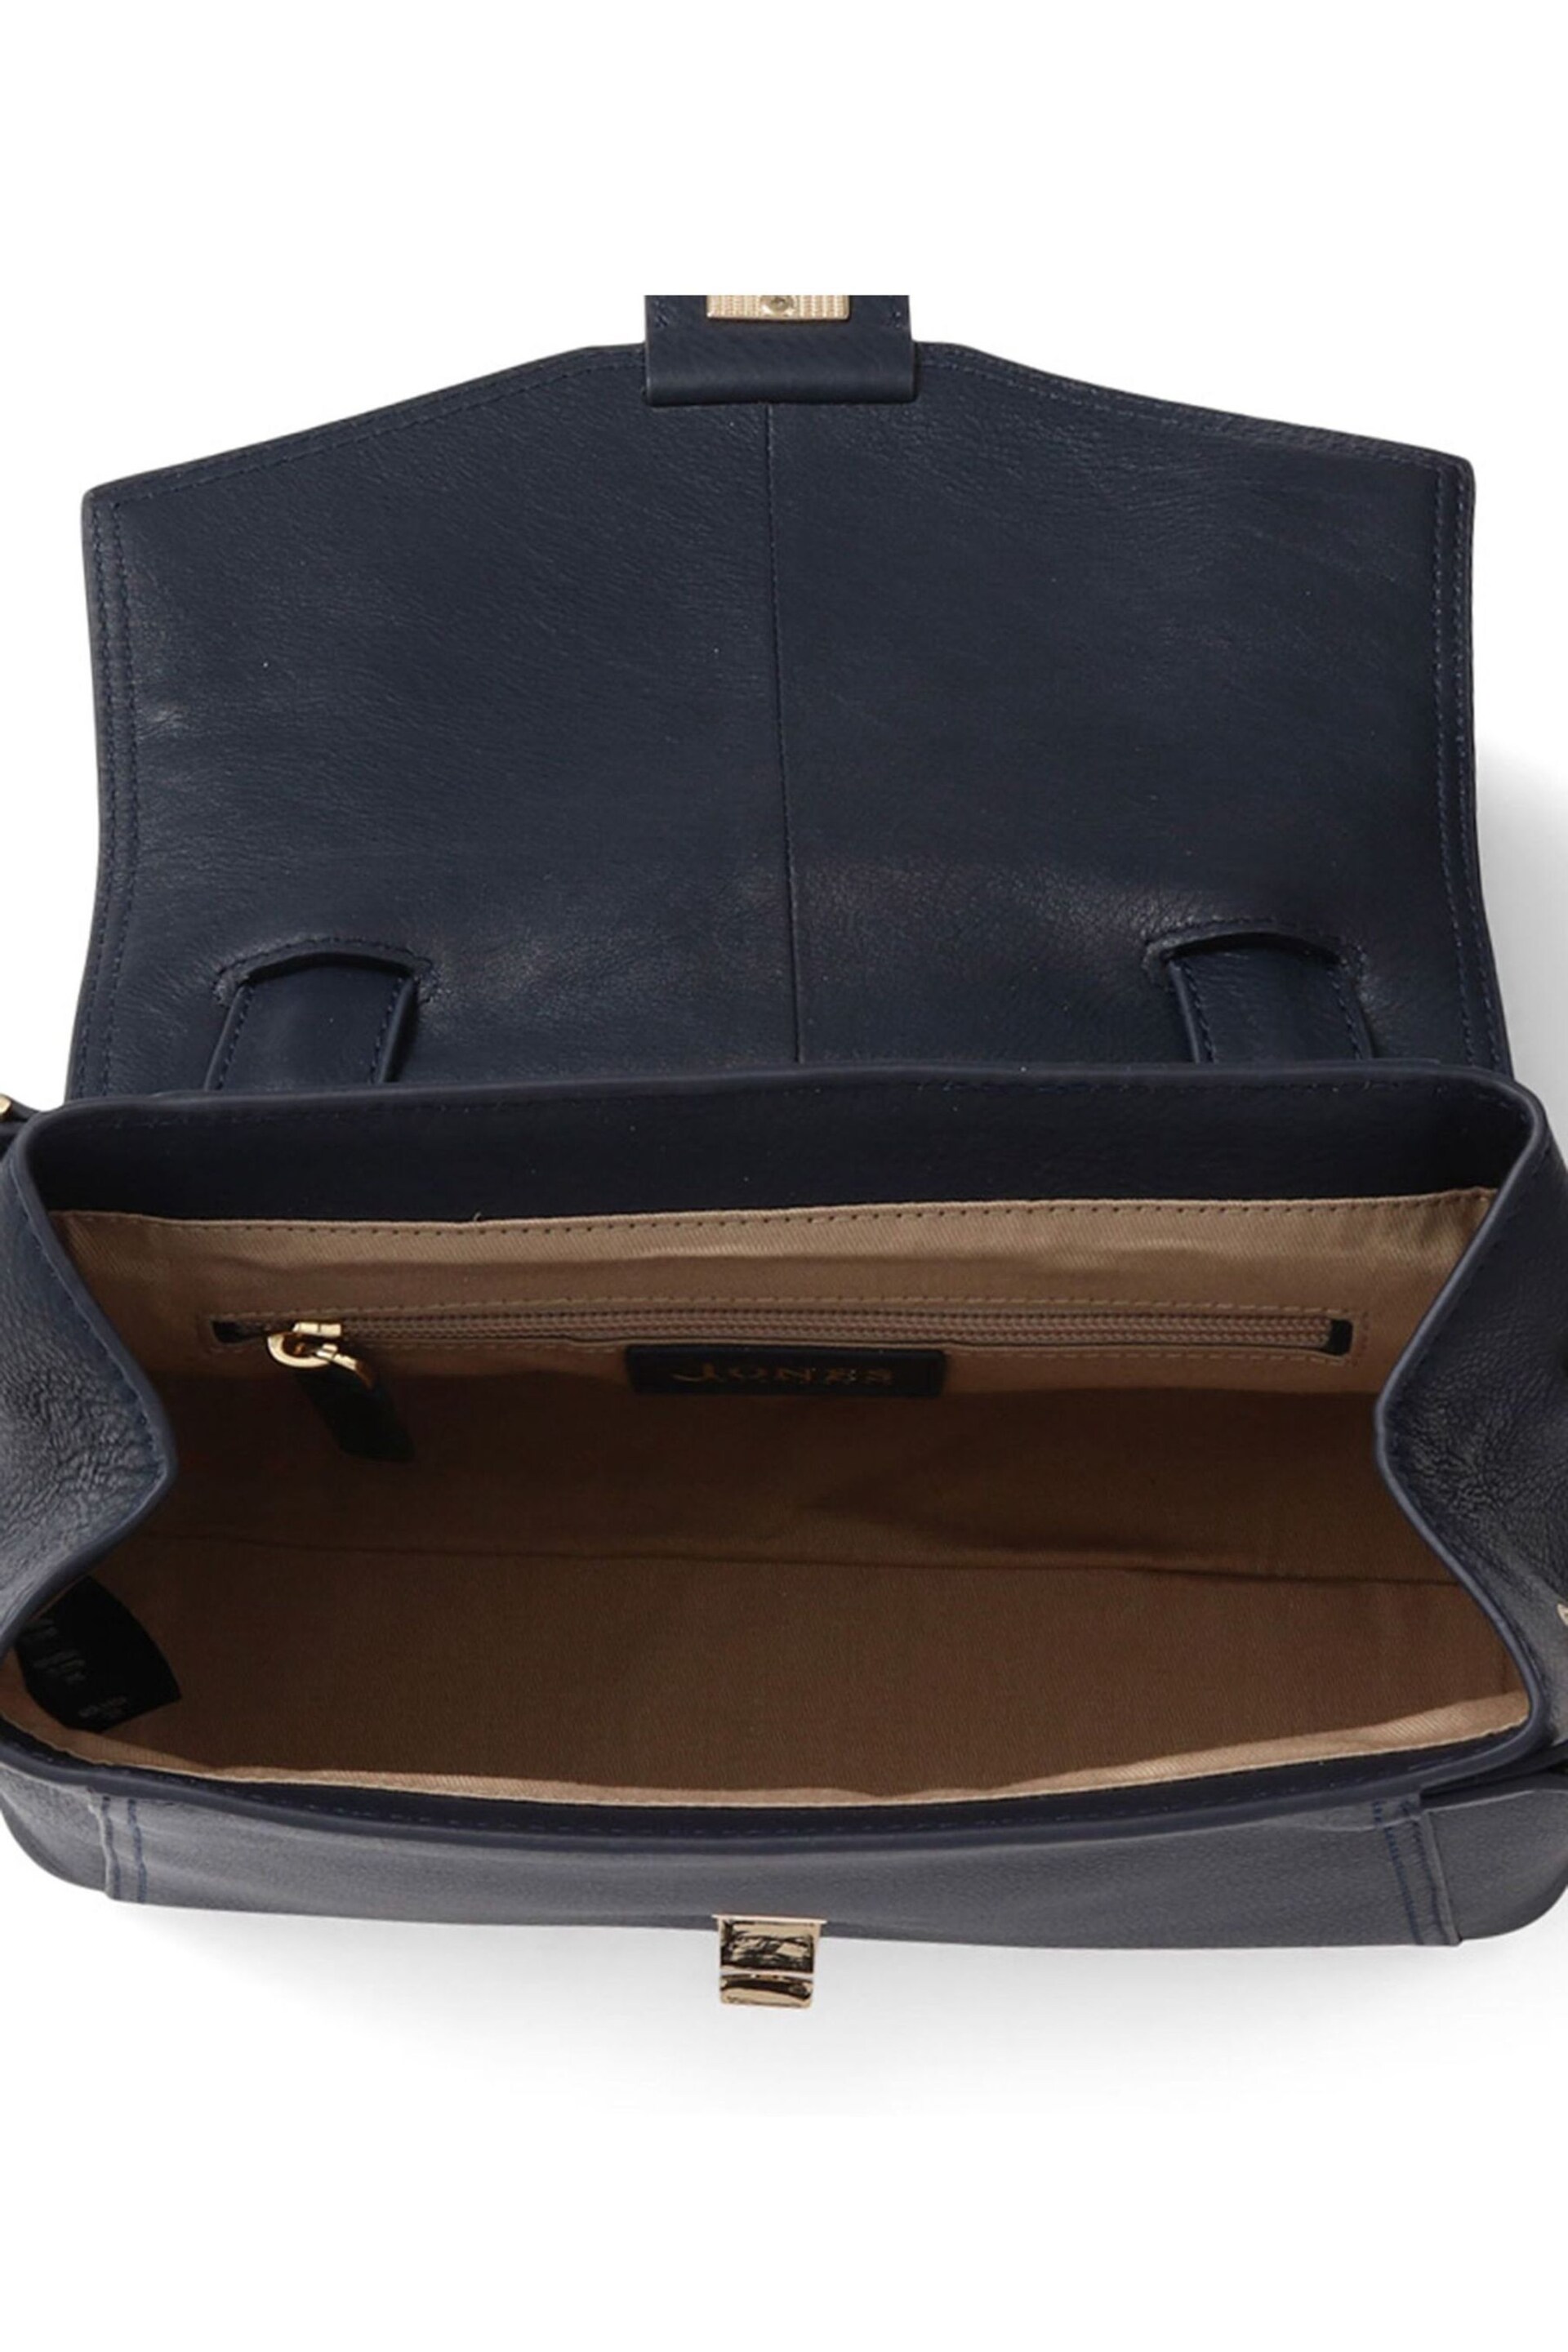 Jones Bootmaker Blue Vanya Leather Handbag - Image 3 of 3